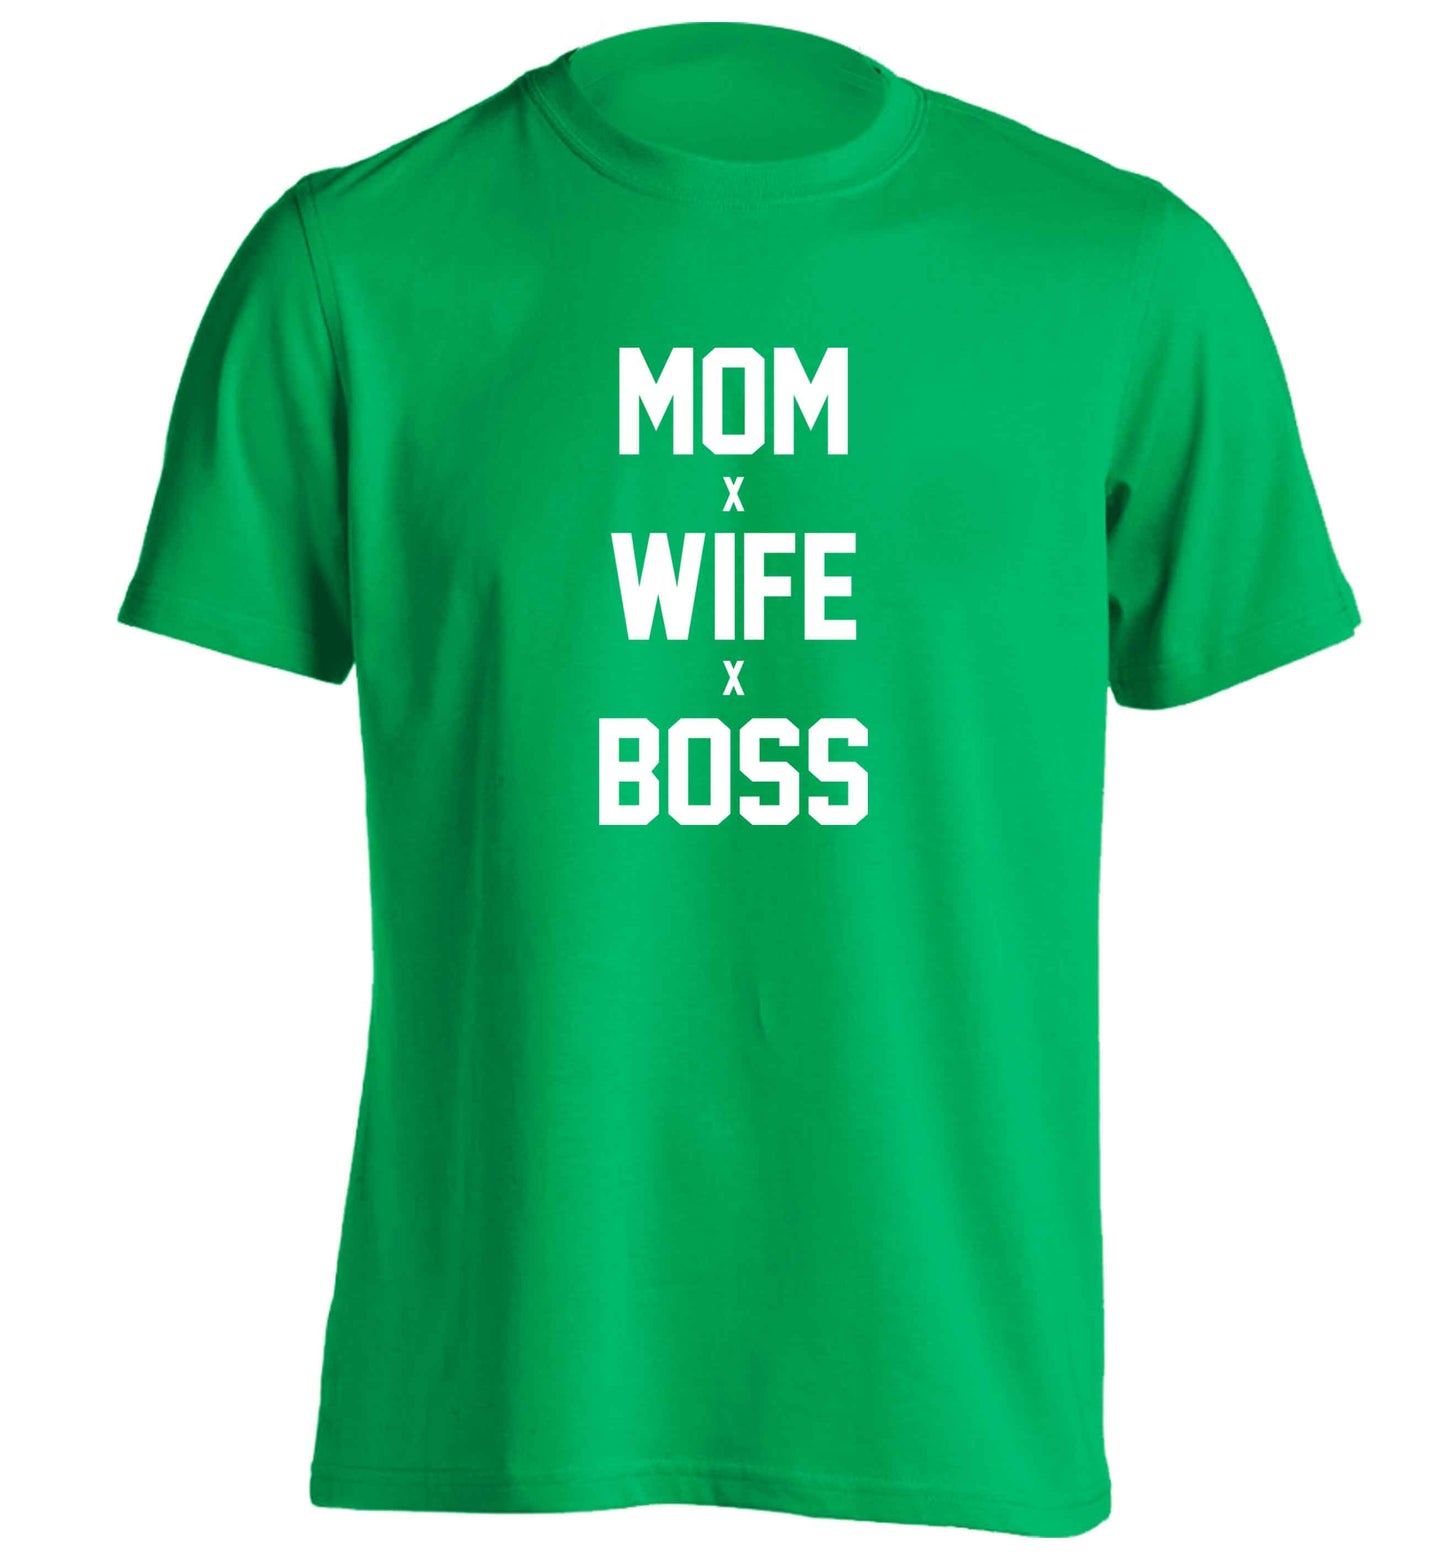 Mum wife boss adults unisex green Tshirt 2XL